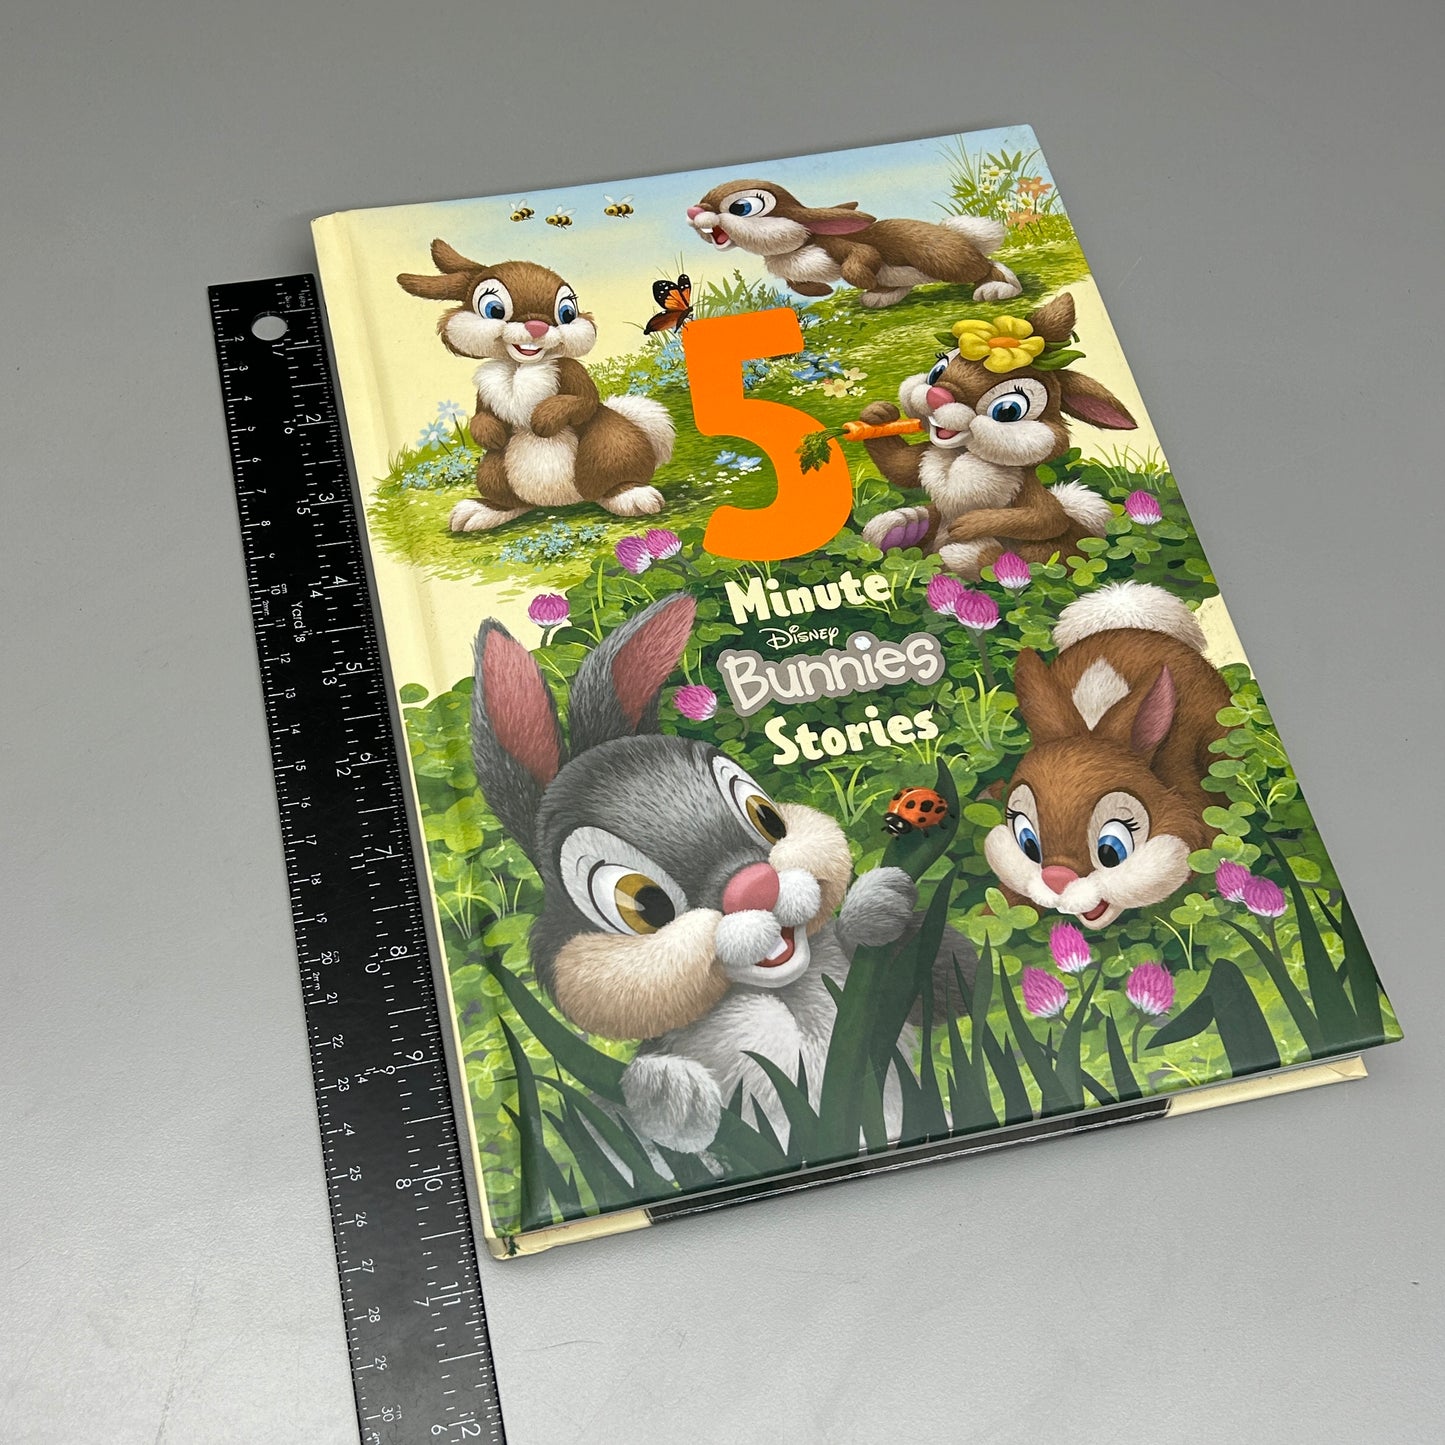 DISNEY 5 Minute Bunnies Stories Hardback Book (New)